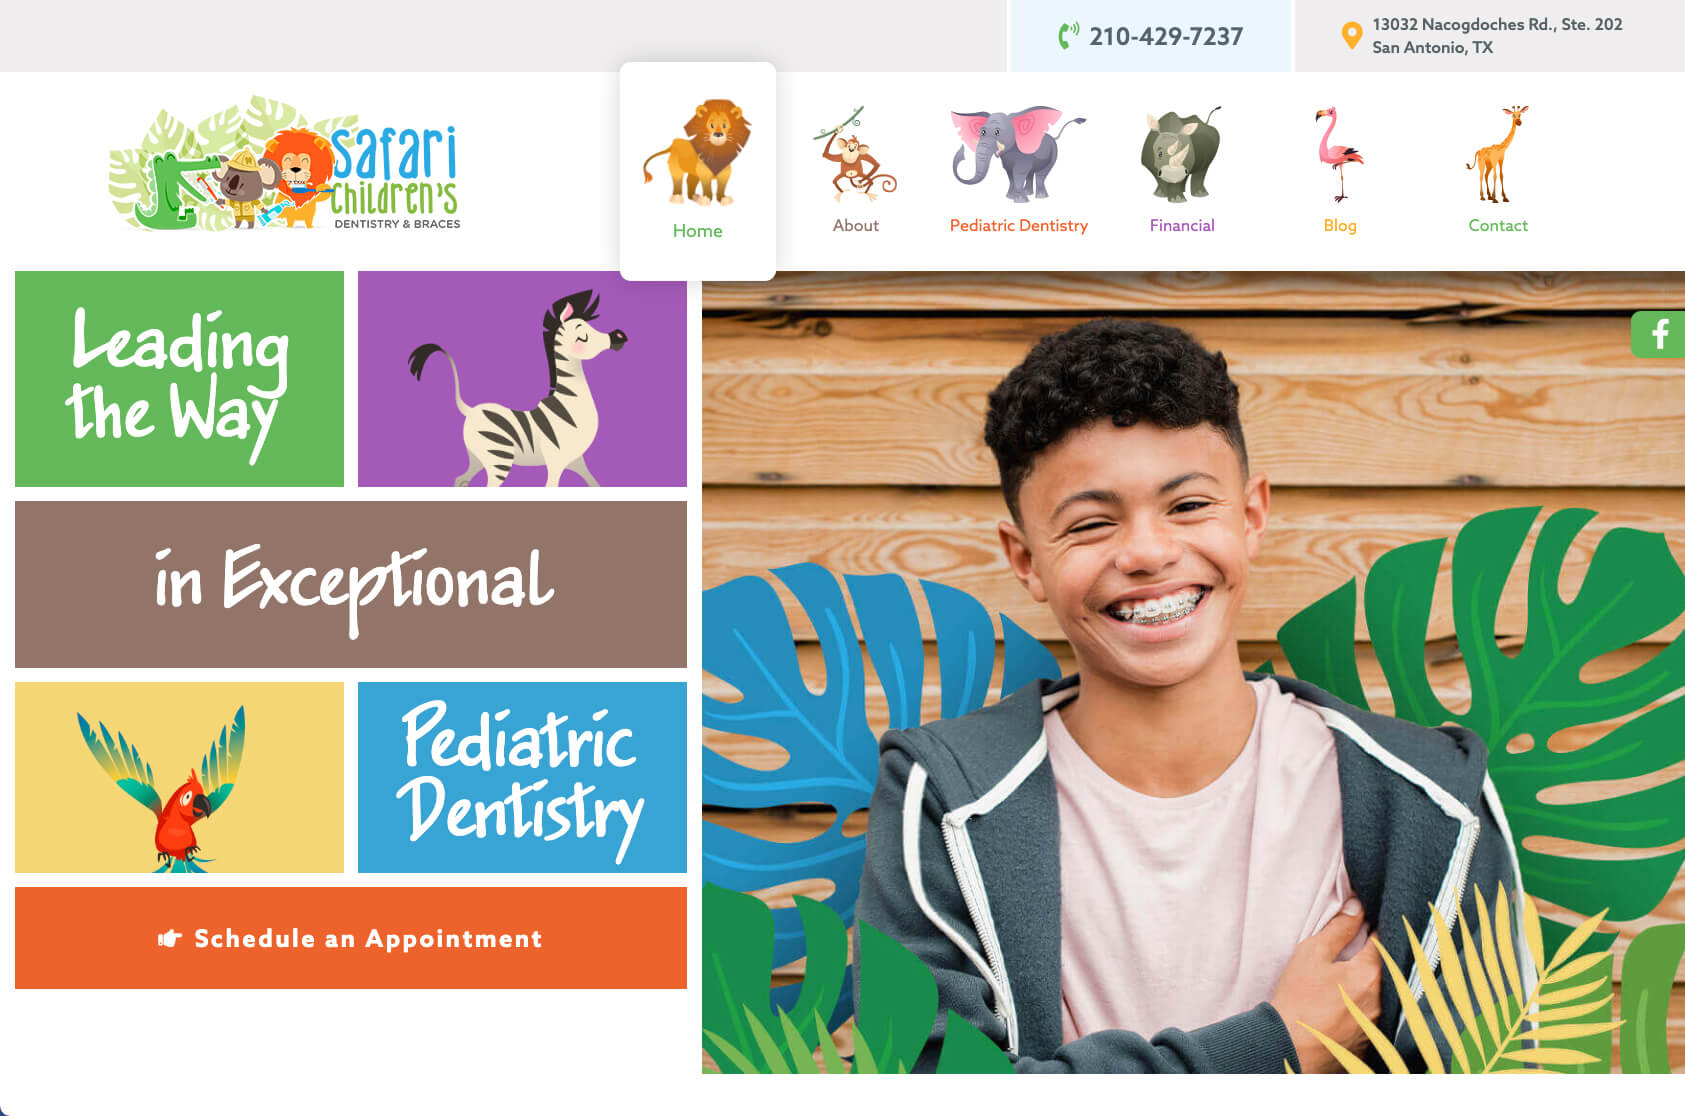 Safari Children's Dentistry & Braces website screencap